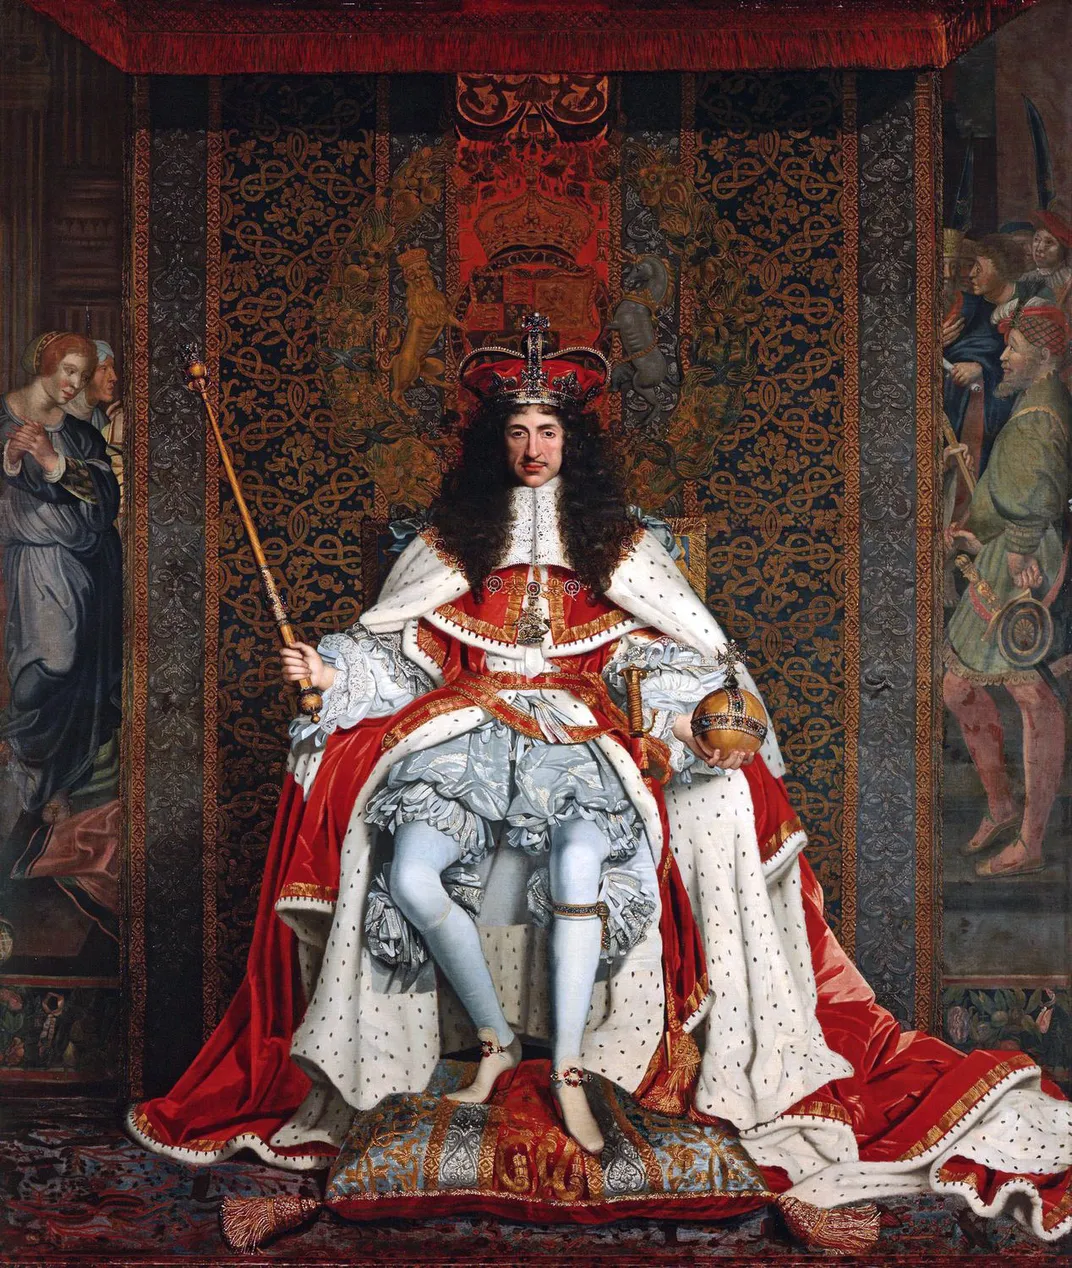 Charles II's coronation portrait